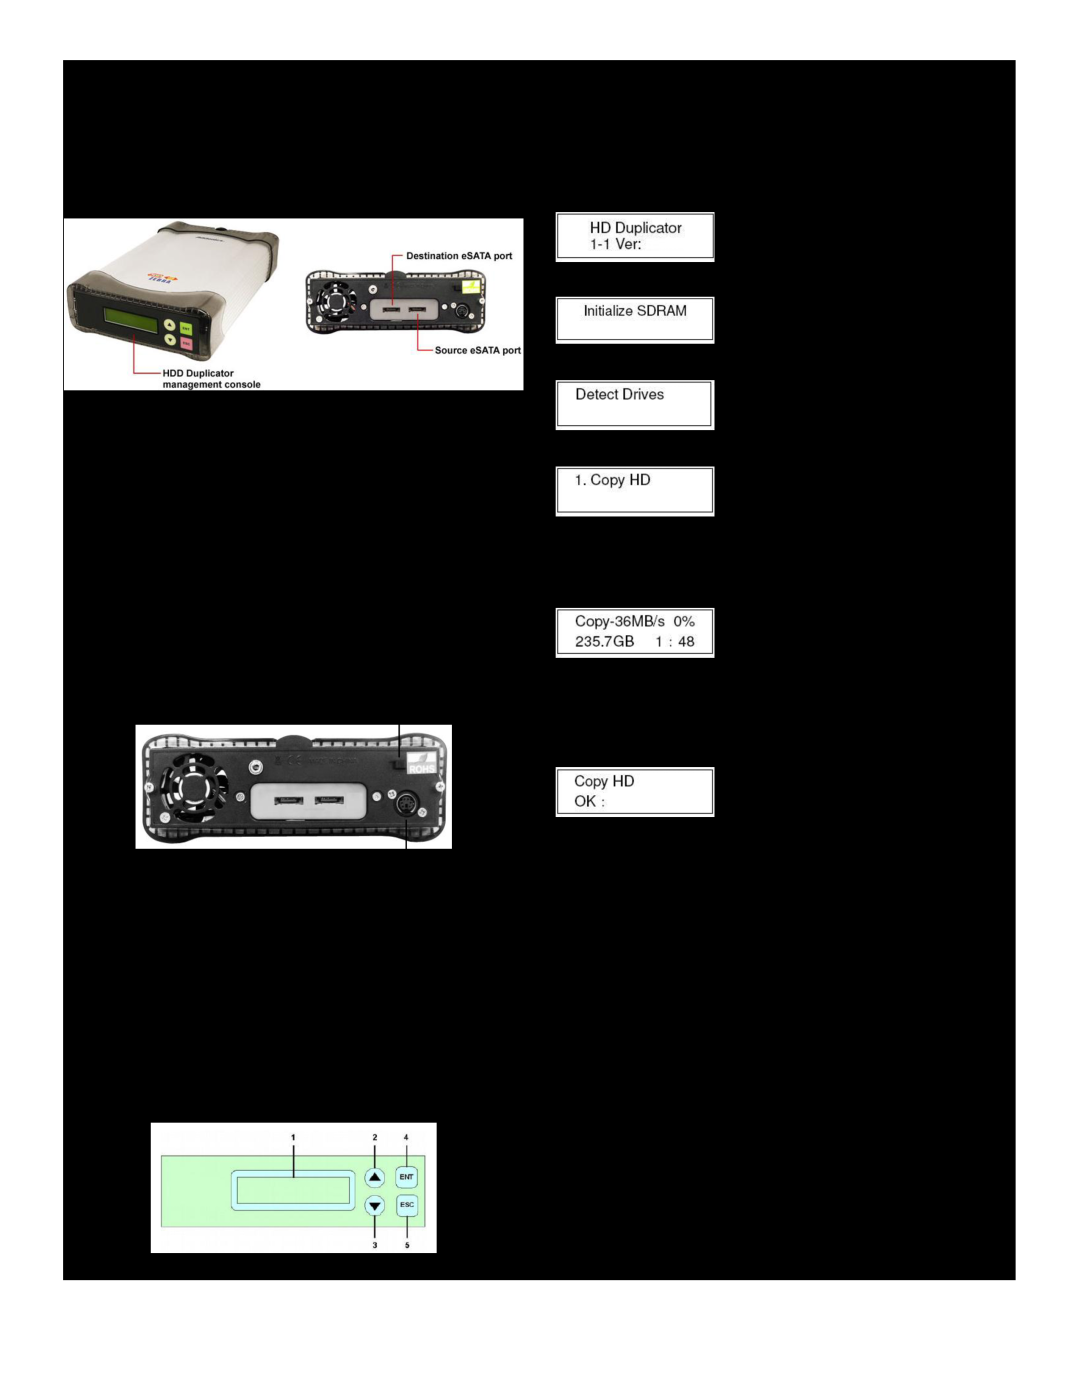 Addonics Technologies user manual Addonics Technologies, Model ZHDUESA, I. HDD Duplicator Overview, Step 